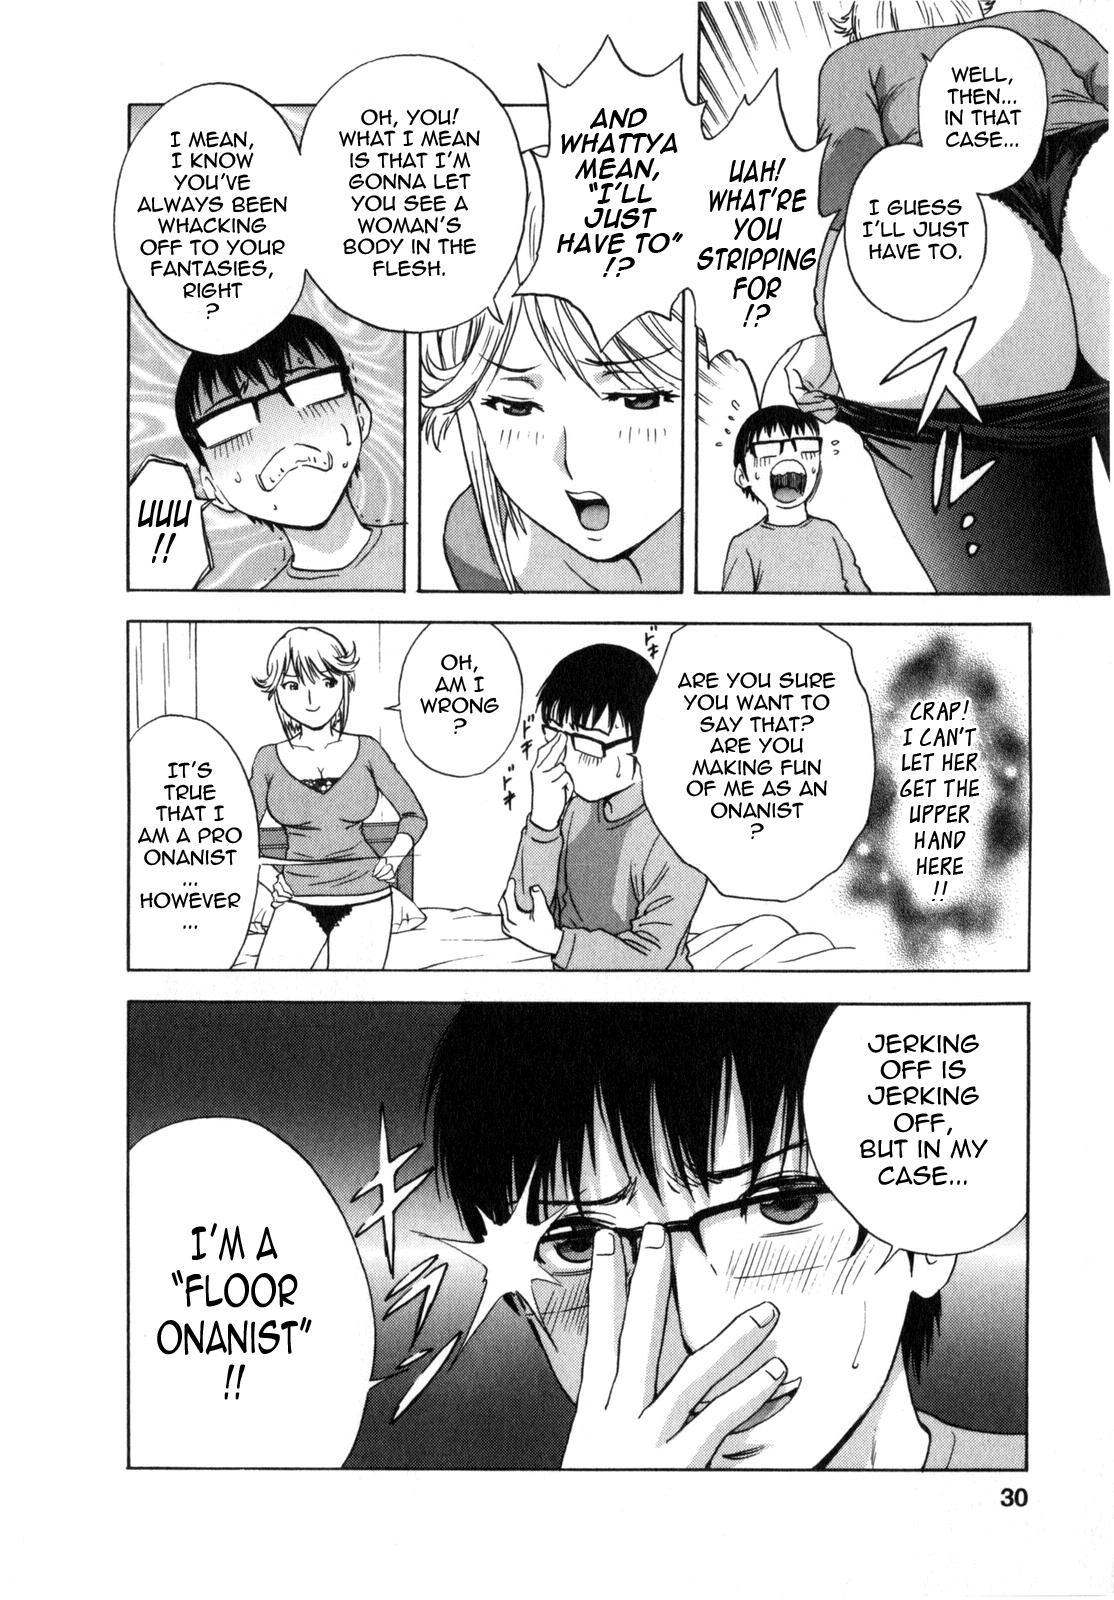 [Hidemaru] Life with Married Women Just Like a Manga 1 - Ch. 1-2 [English] {Tadanohito} 31